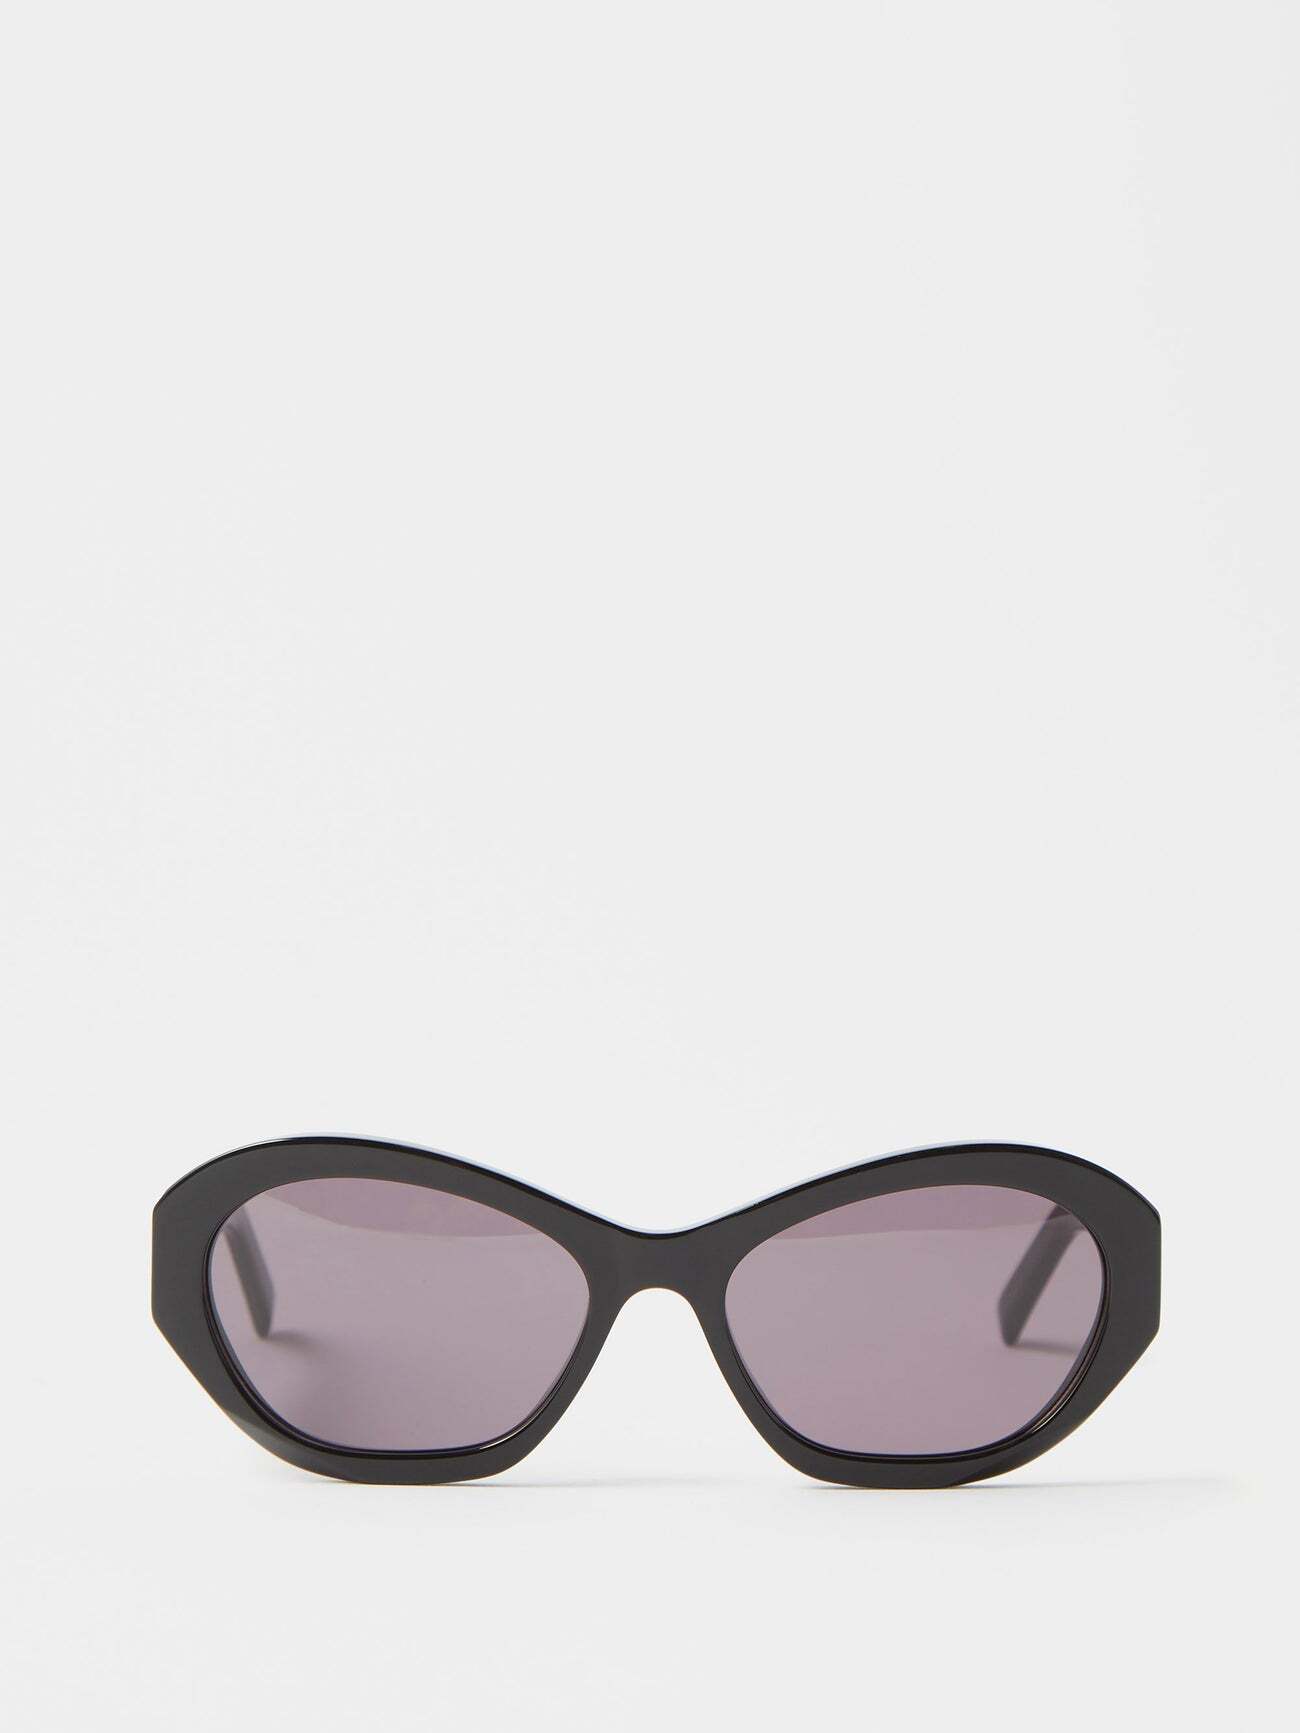 Givenchy Eyewear - Gv Day Round Acetate Sunglasses - Womens - Black